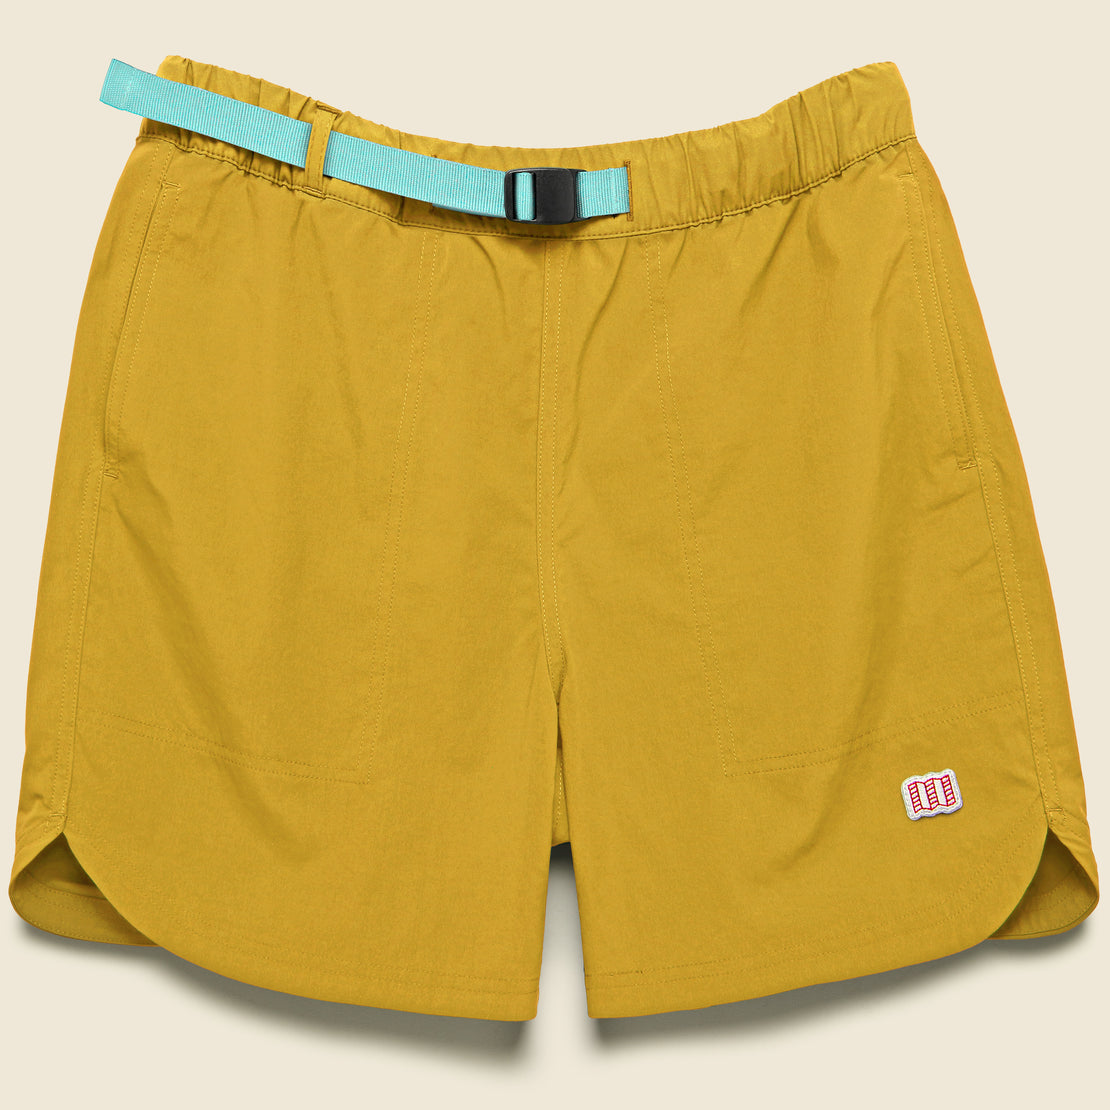 Topo Designs River Shorts - Mustard